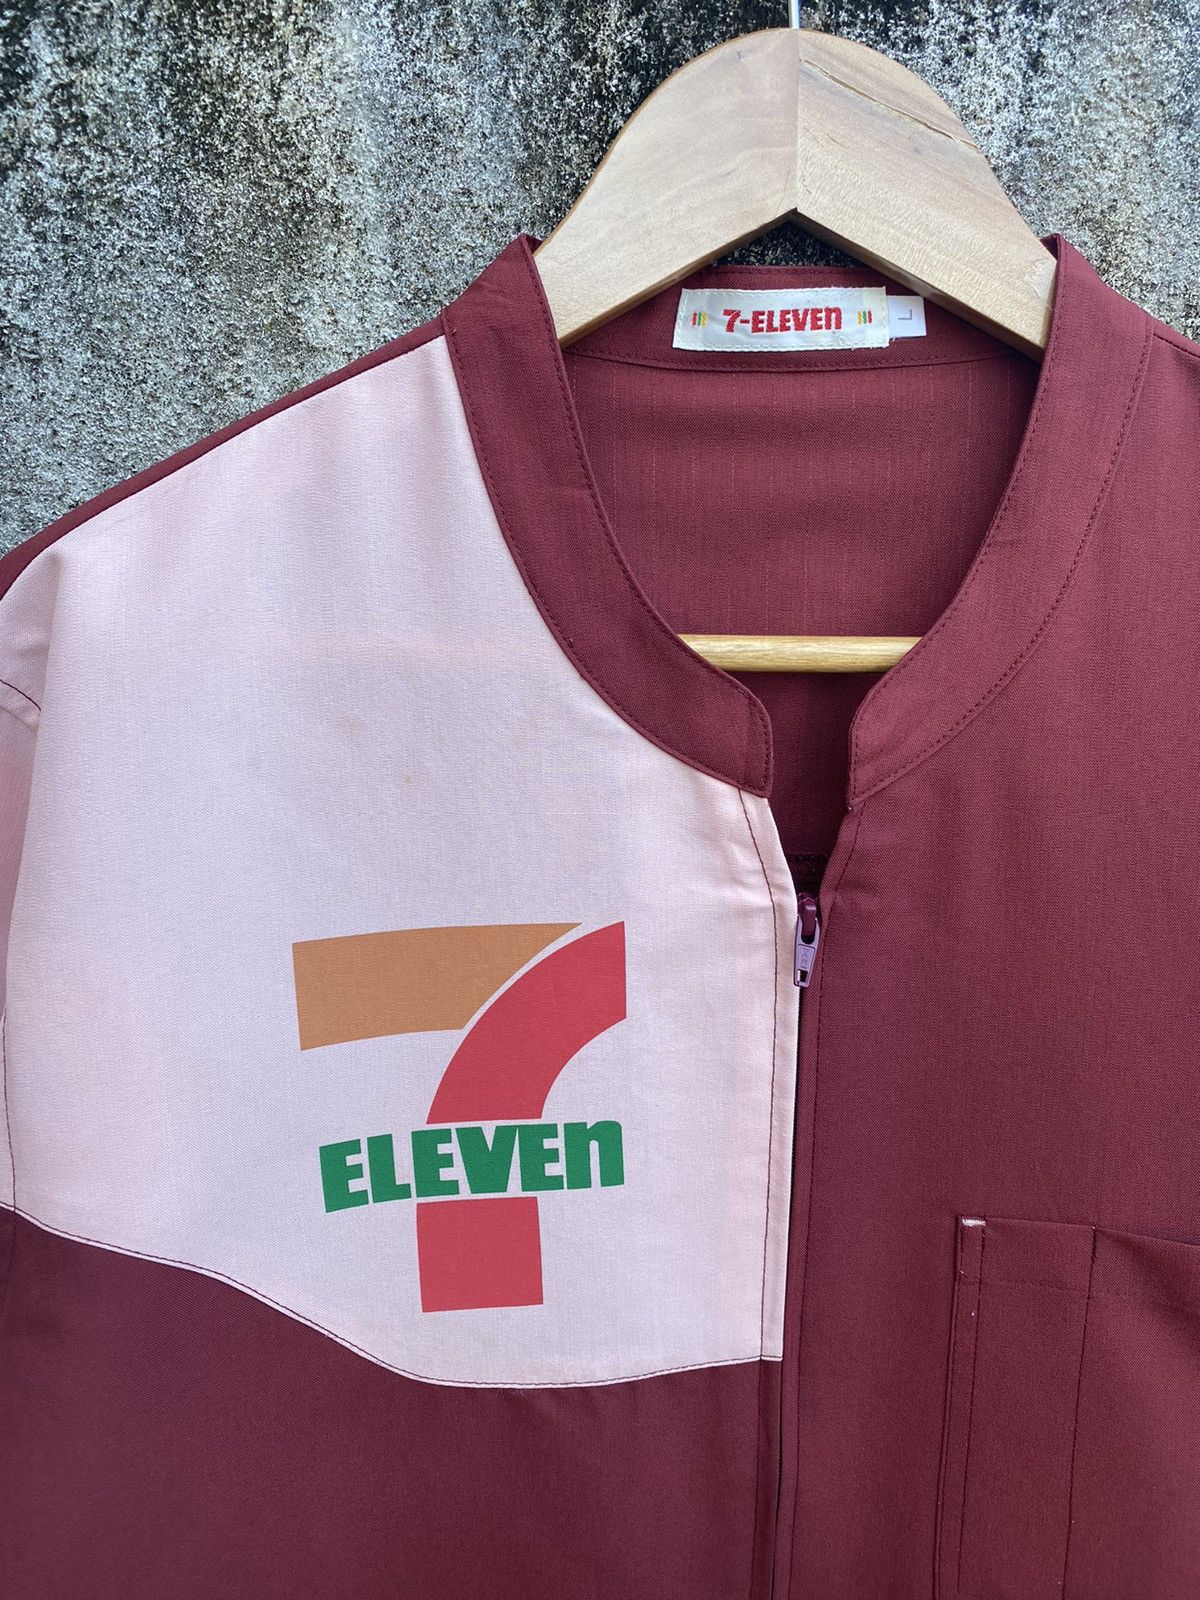 Vintage Vintage 90s 7 ELEVEN Uniform Workwear Zipper Jacket Size US L / EU 52-54 / 3 - 5 Thumbnail